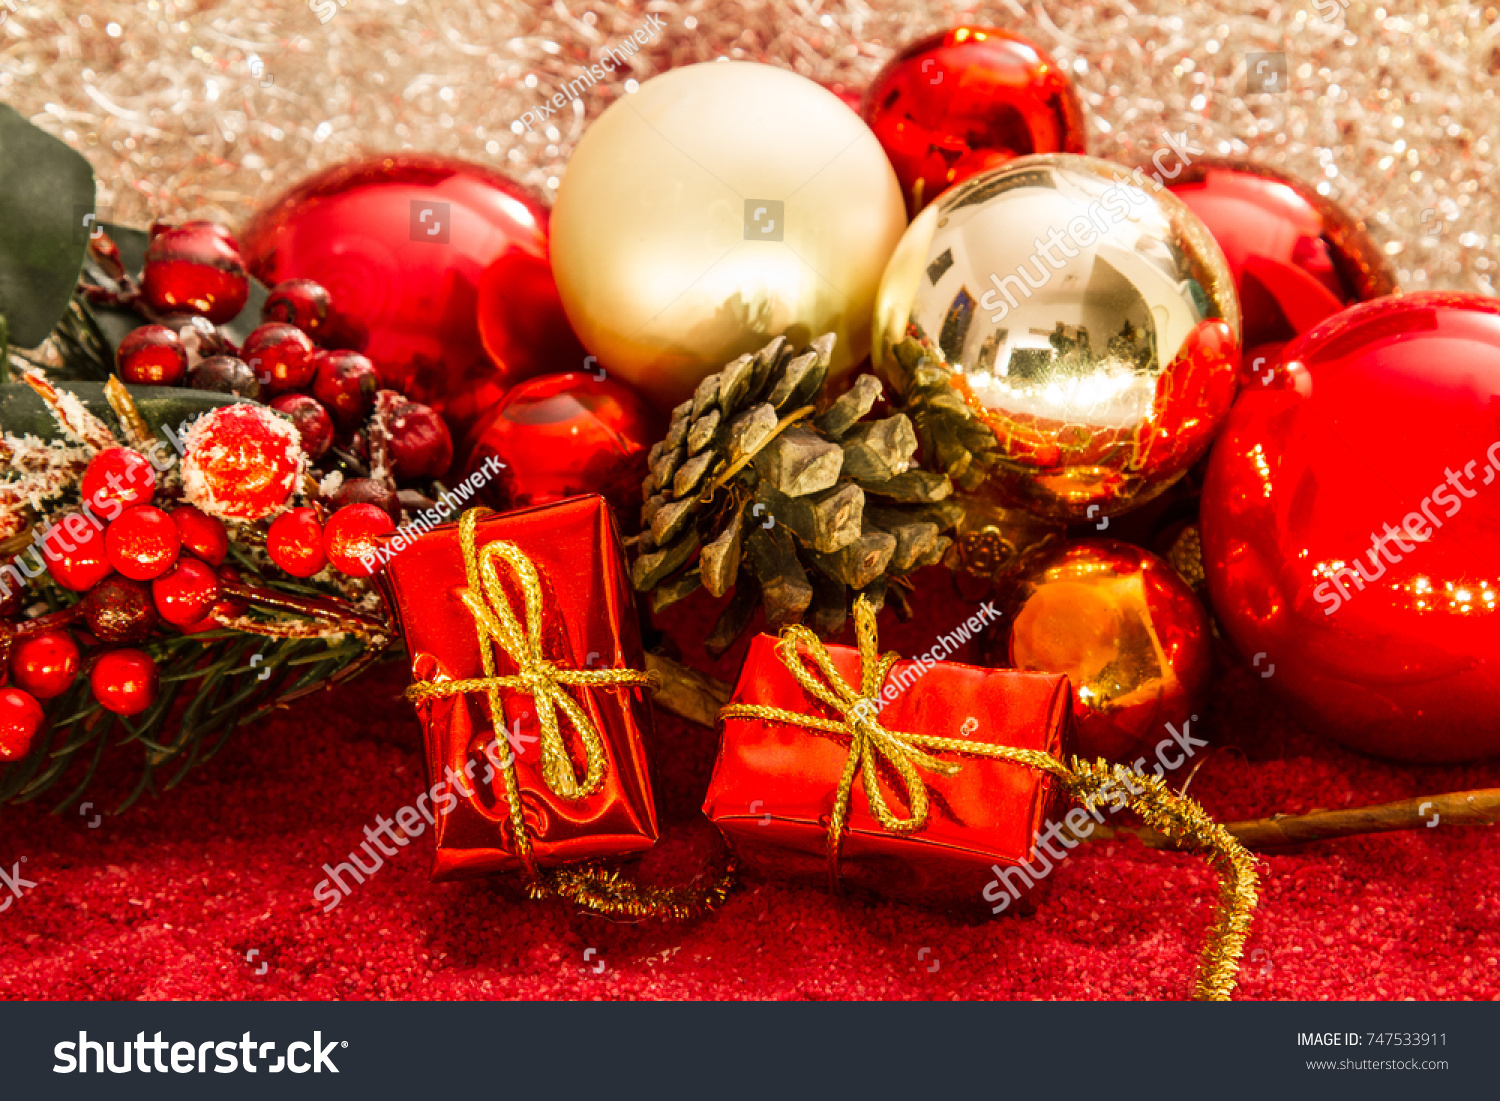 Christmas Desk Decoration Christmas Balls Gifts Stock Photo Edit Now 747533911